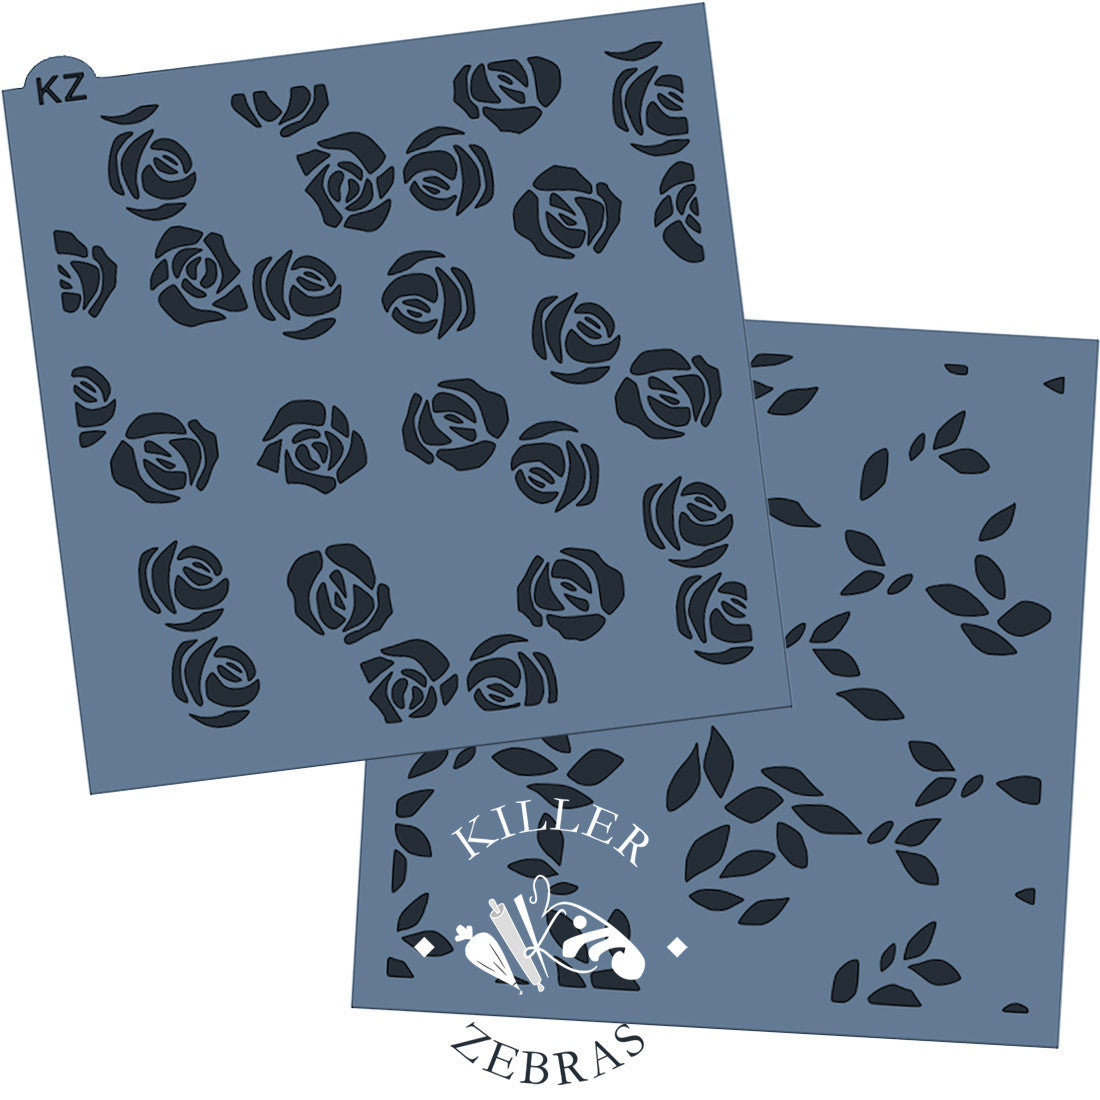 5.5 x 5.5 Stencil Roses - Single or Layered Stencil Layered Stencils